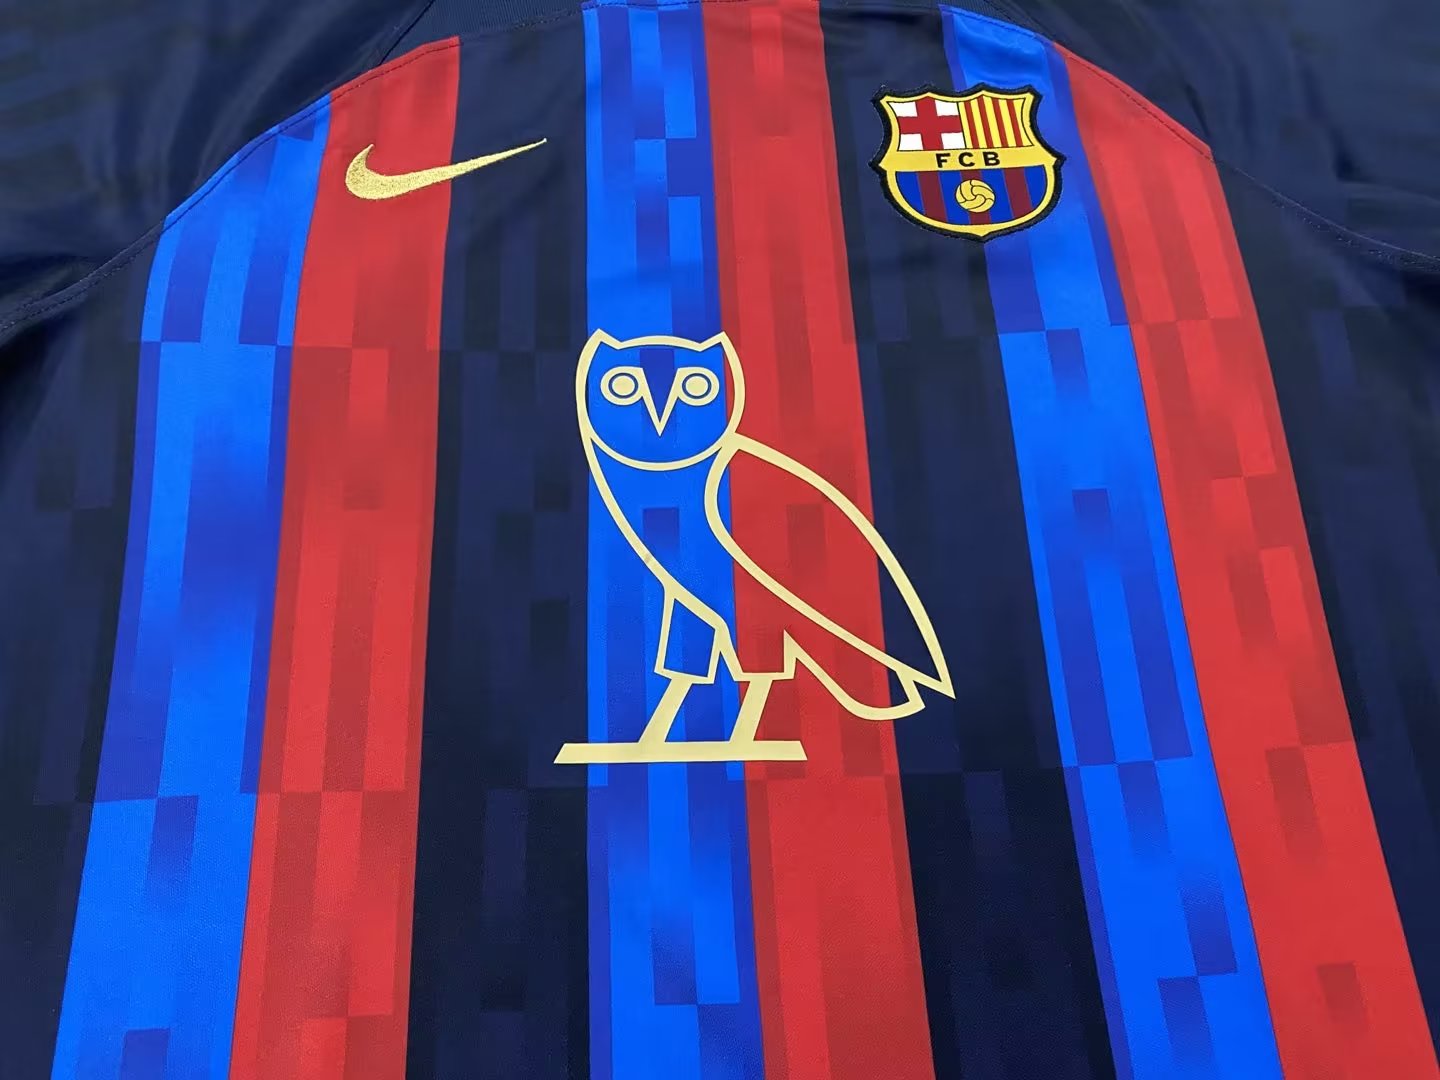 Raphina FC Barcelona 2022/23 Home Kit Nike ‘OVO Edition’ Fan Version Soccer Jersey - Navy Blue & Red